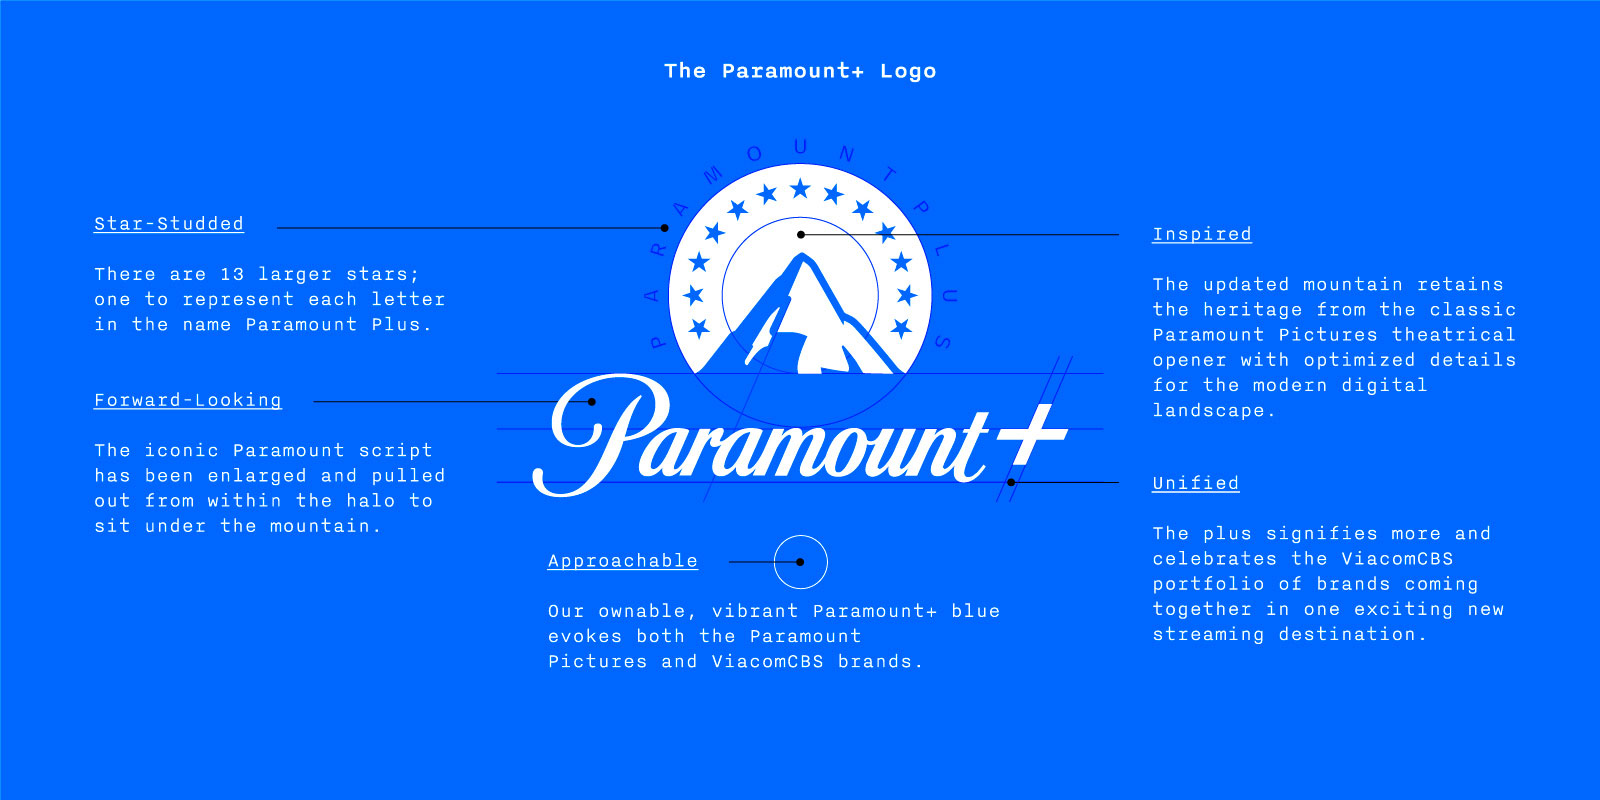 Paramount+ Logo break down